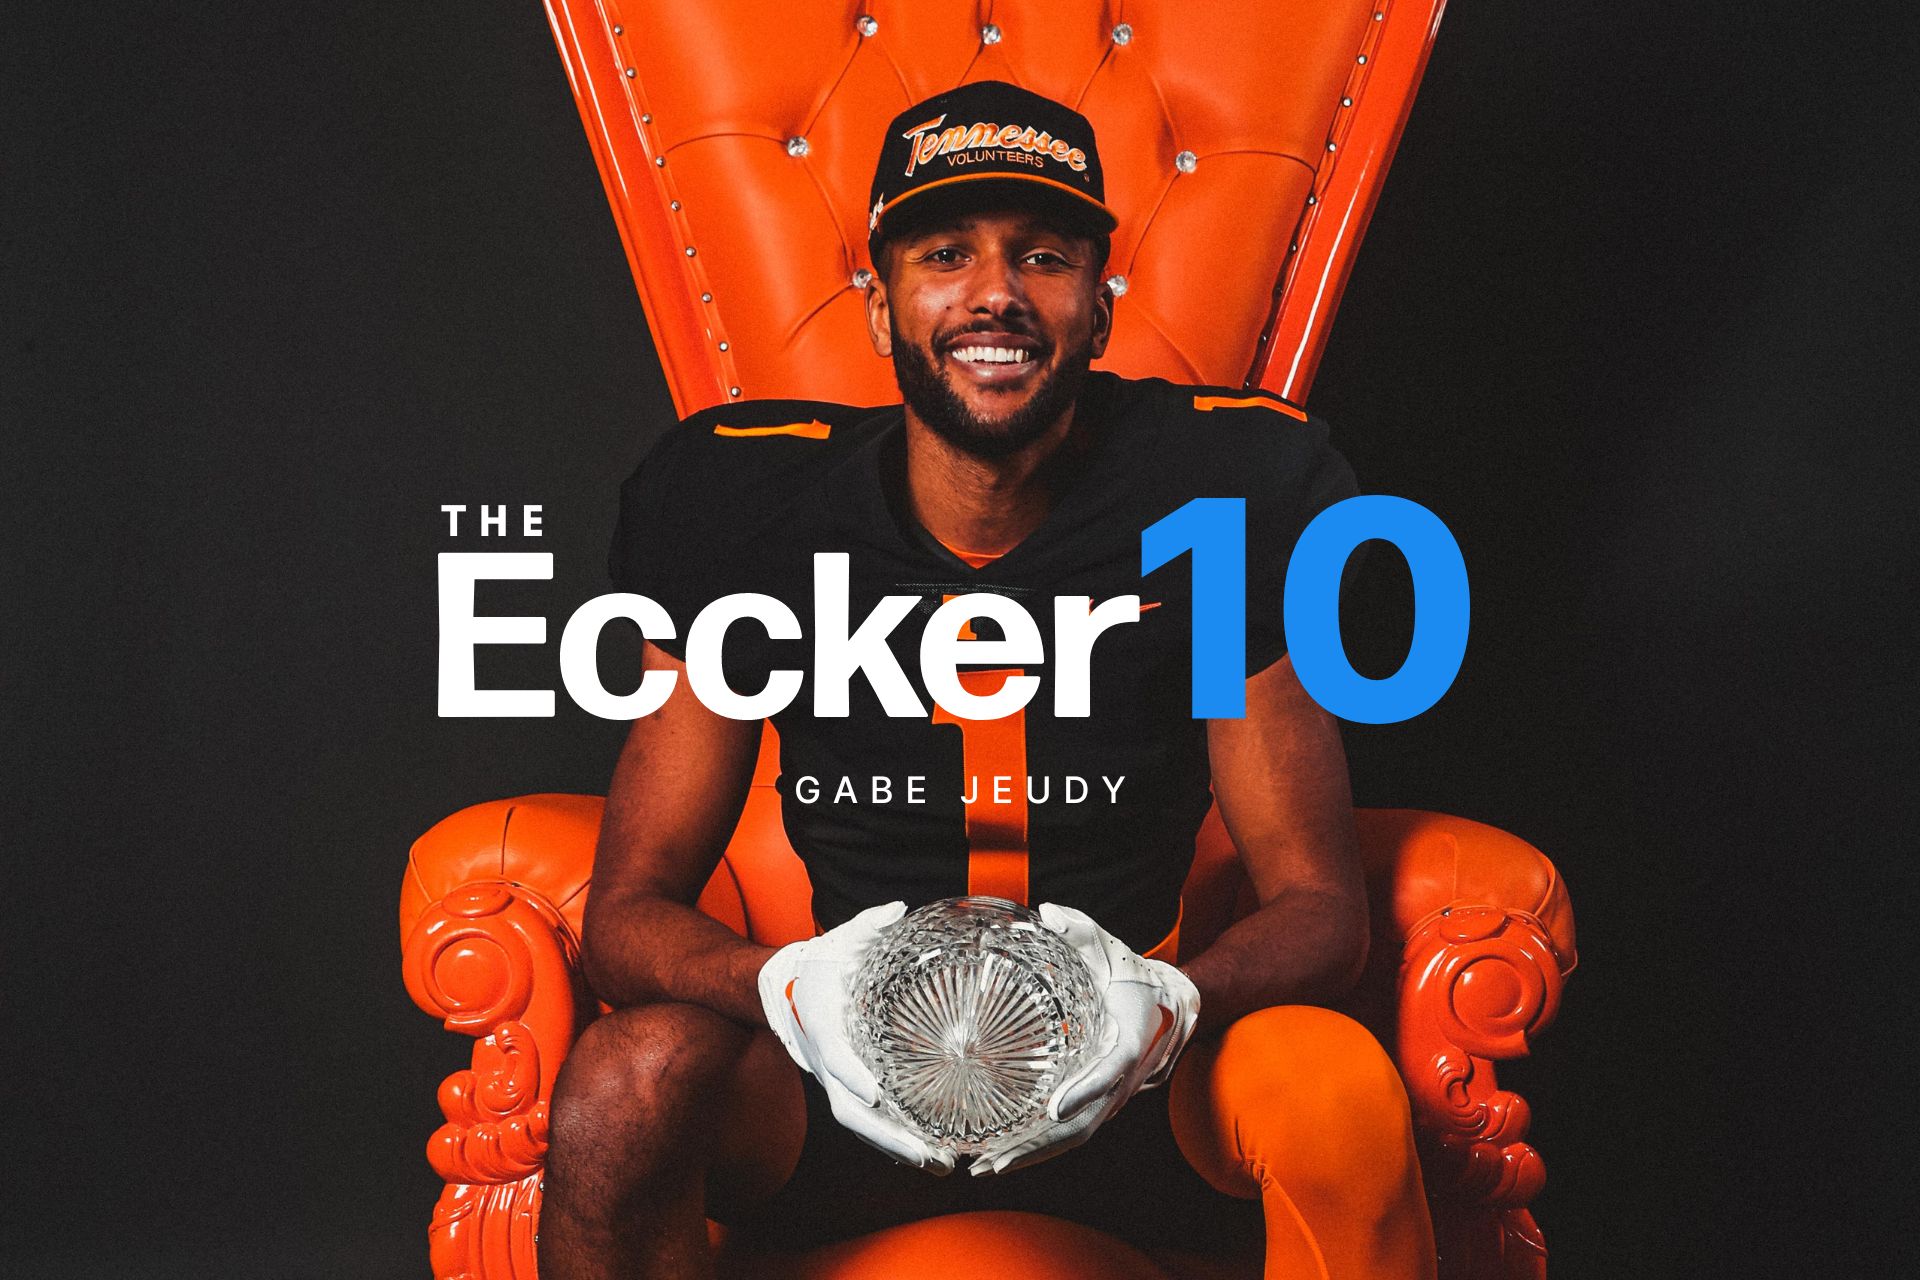 The Eccker 10 - Gabe Jeudy